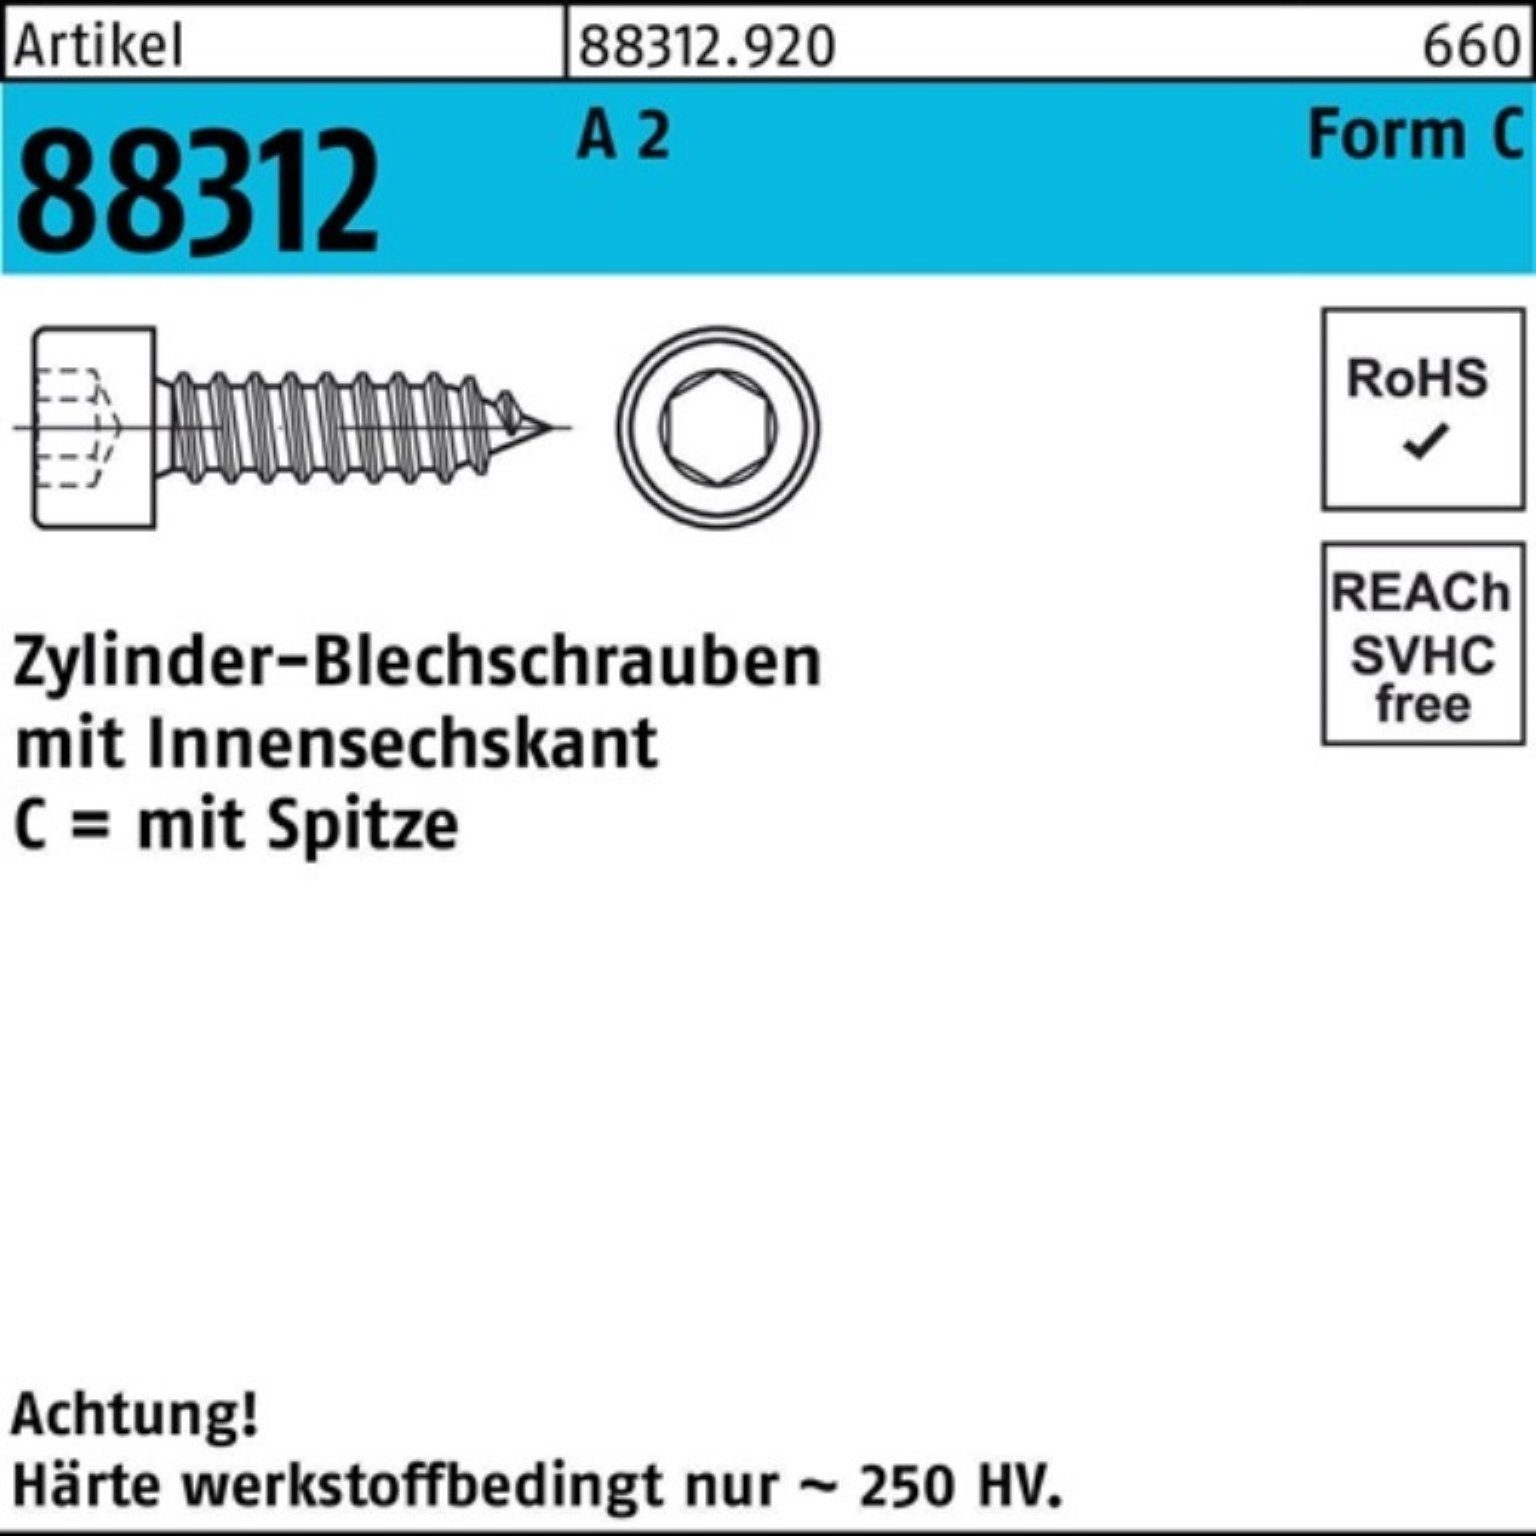 Reyher Blechschraube 200er Pack Zylinderblechschraube R 88312 Spitze/Innen-6kt C 5,5x 50 A